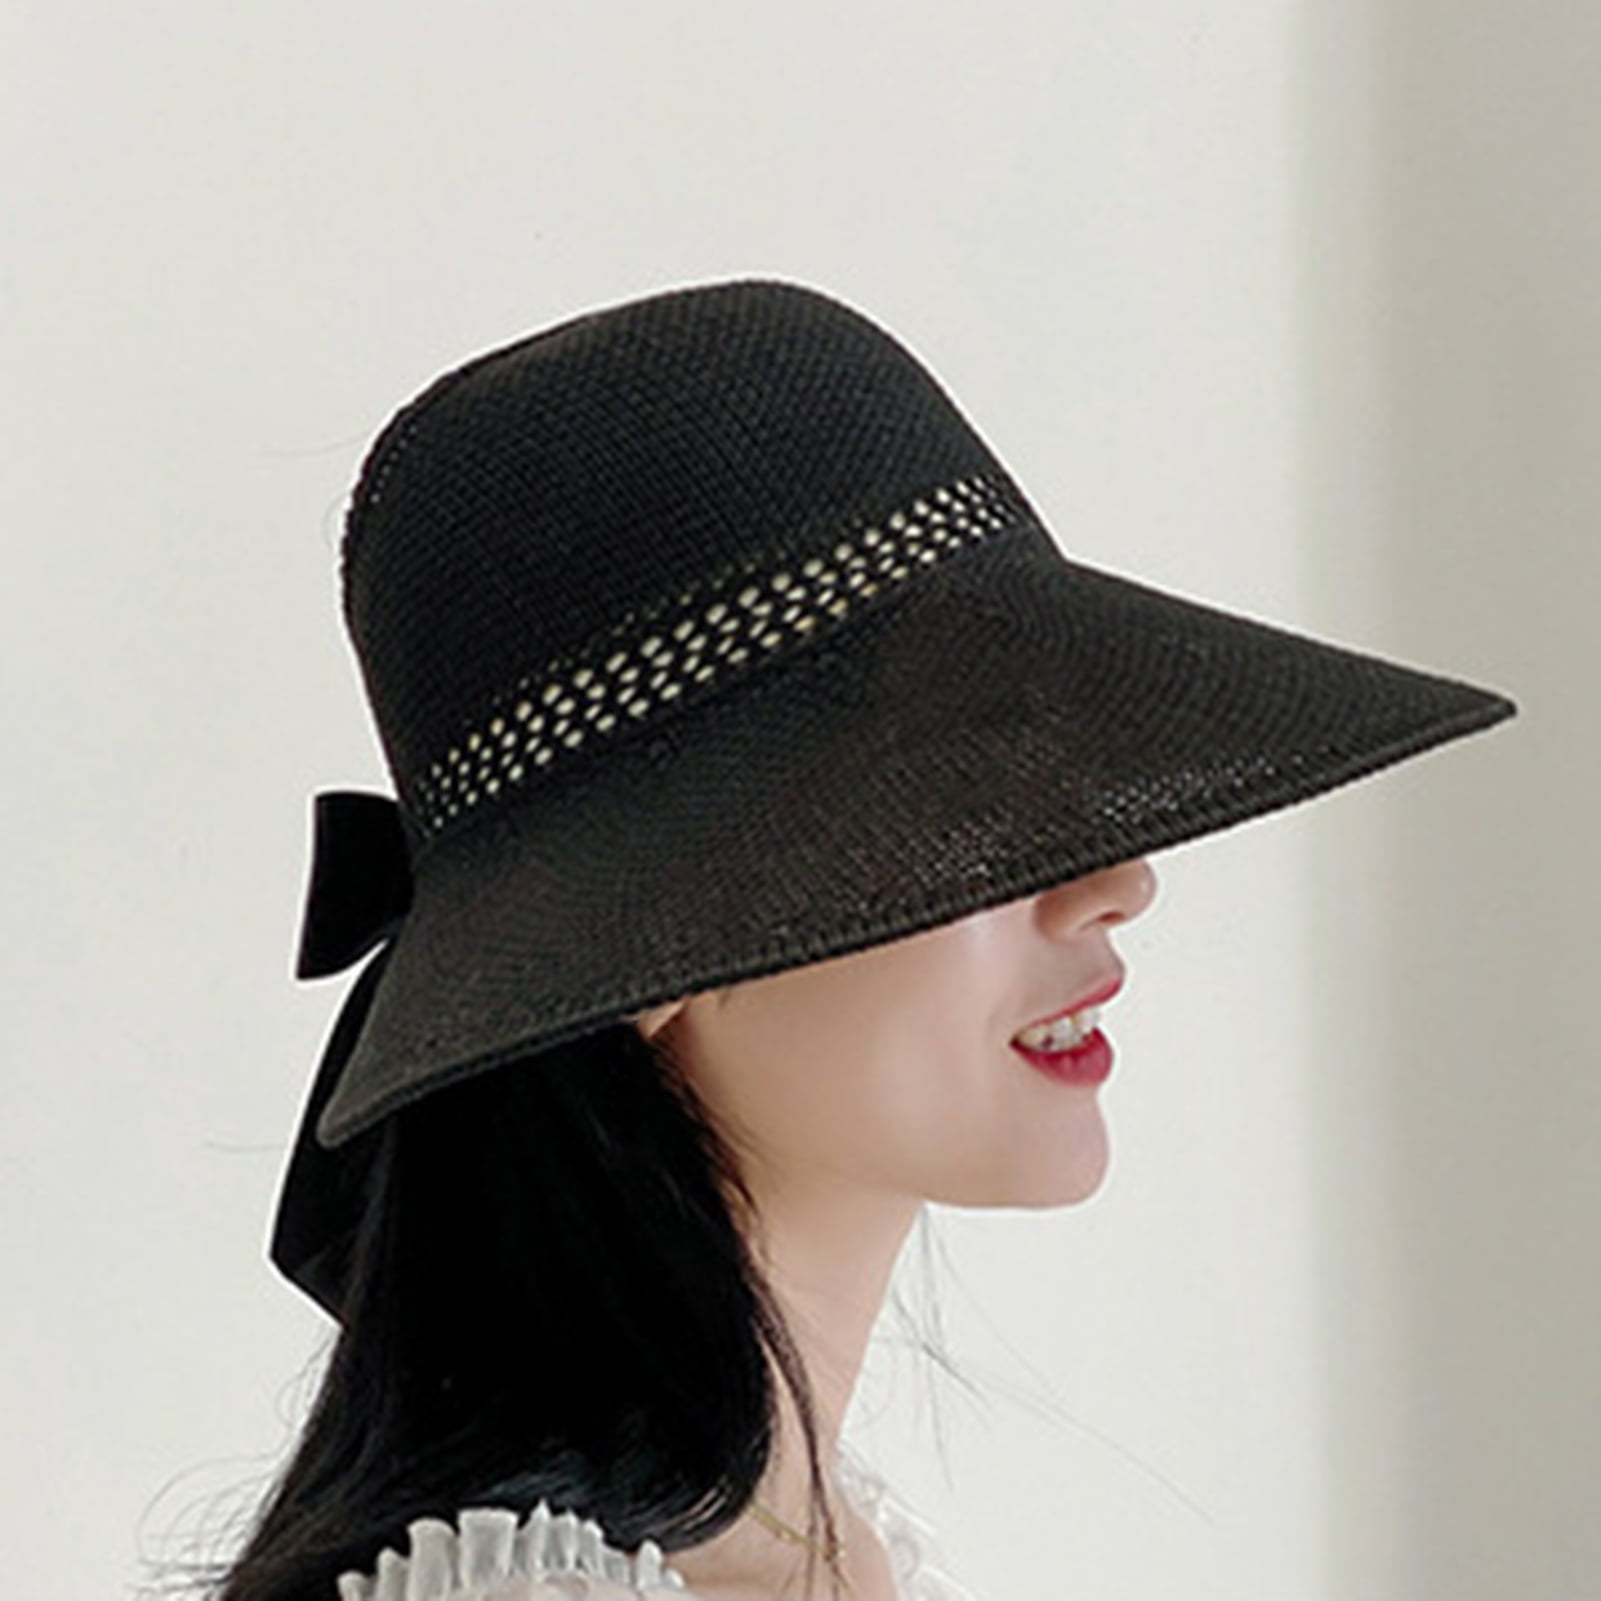 Limei Fashion Women Hats Sunscreen Camping Hat Good-looking